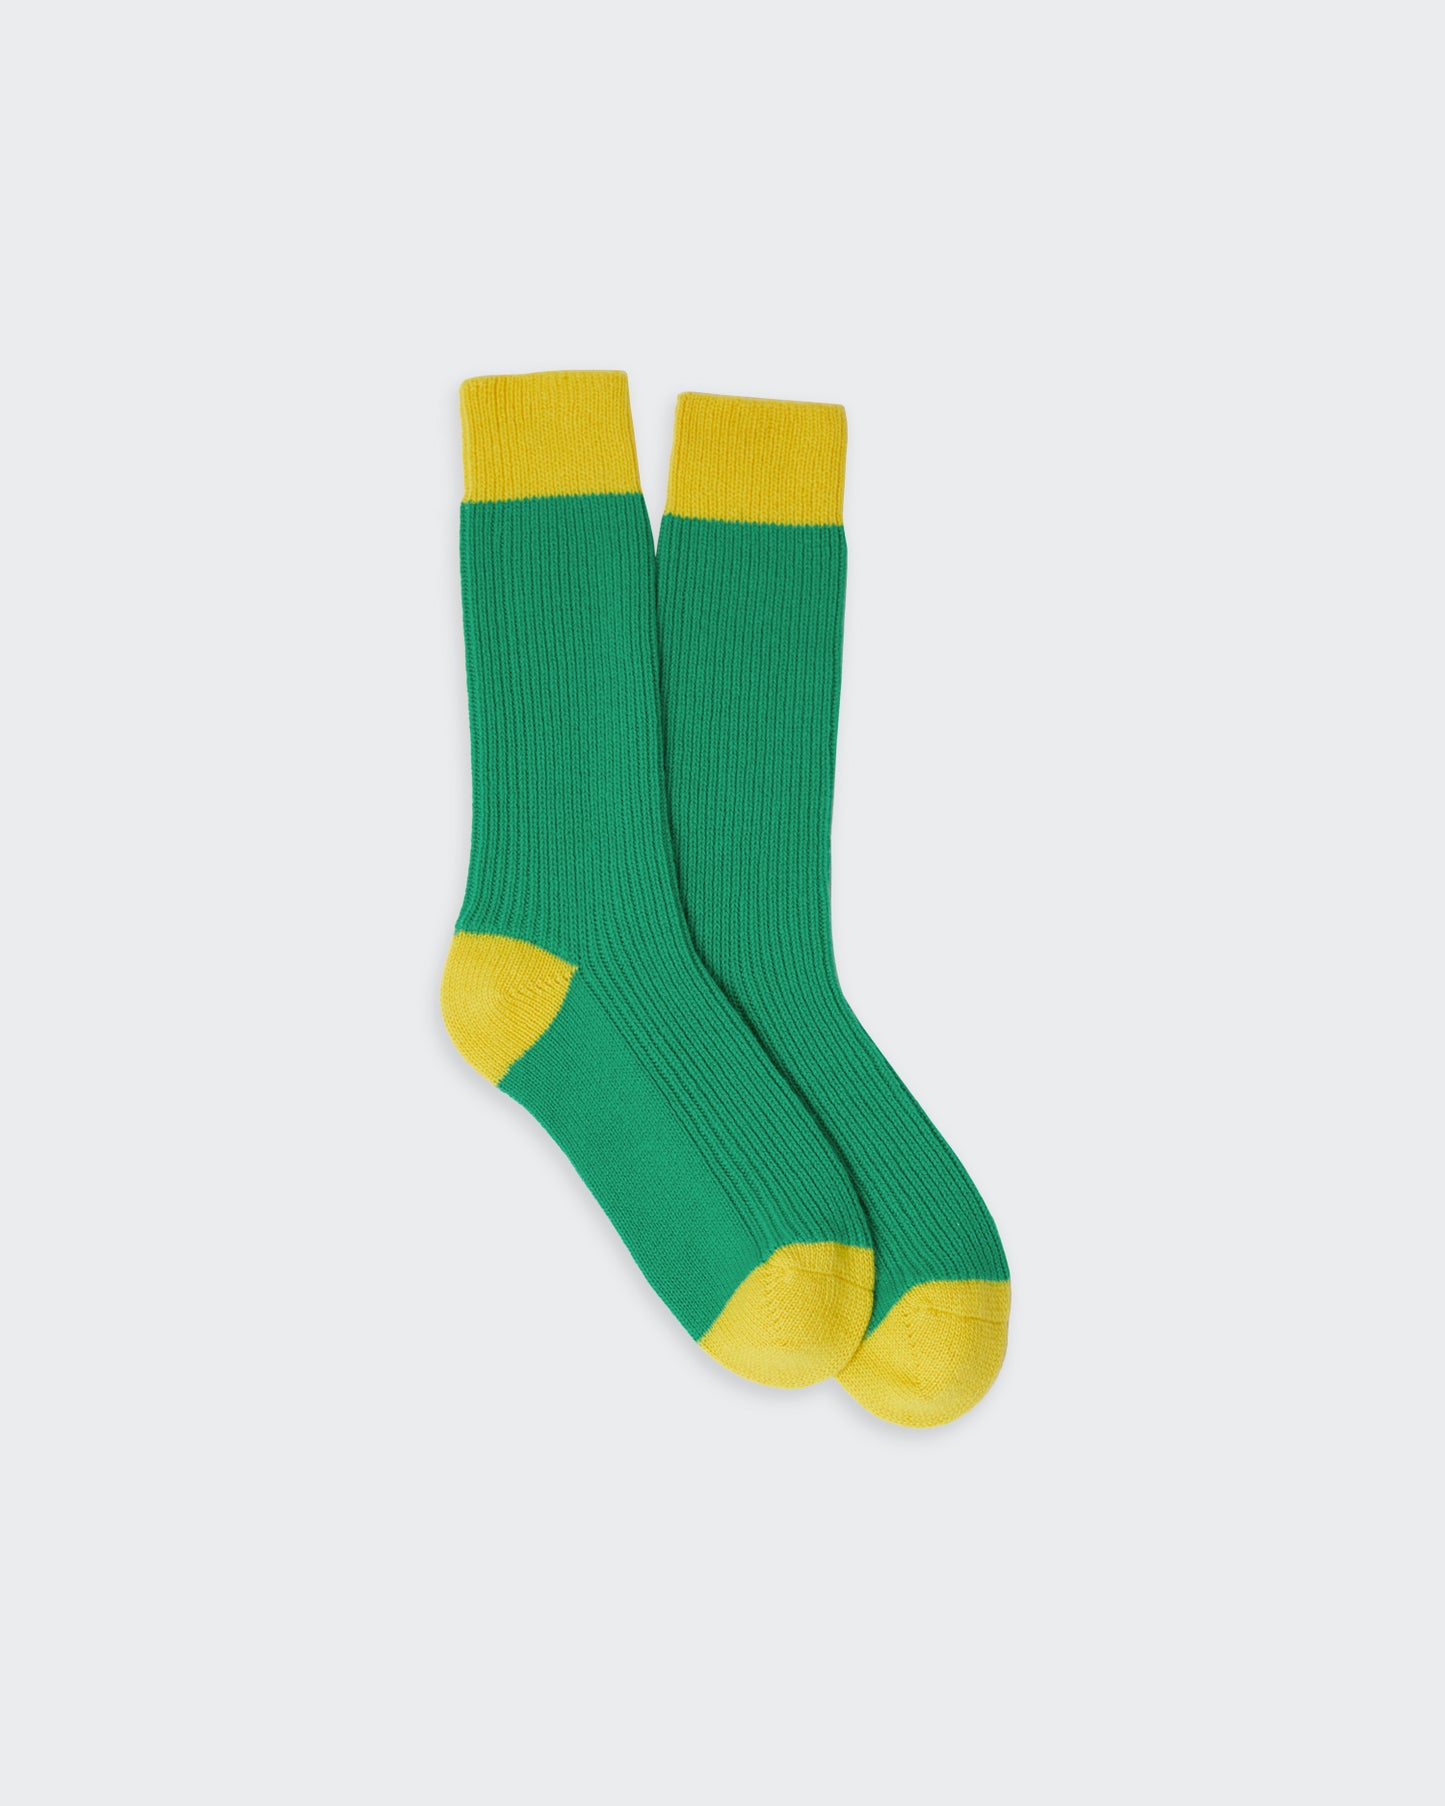 The Soft Socks - Mary Jane/Yellow